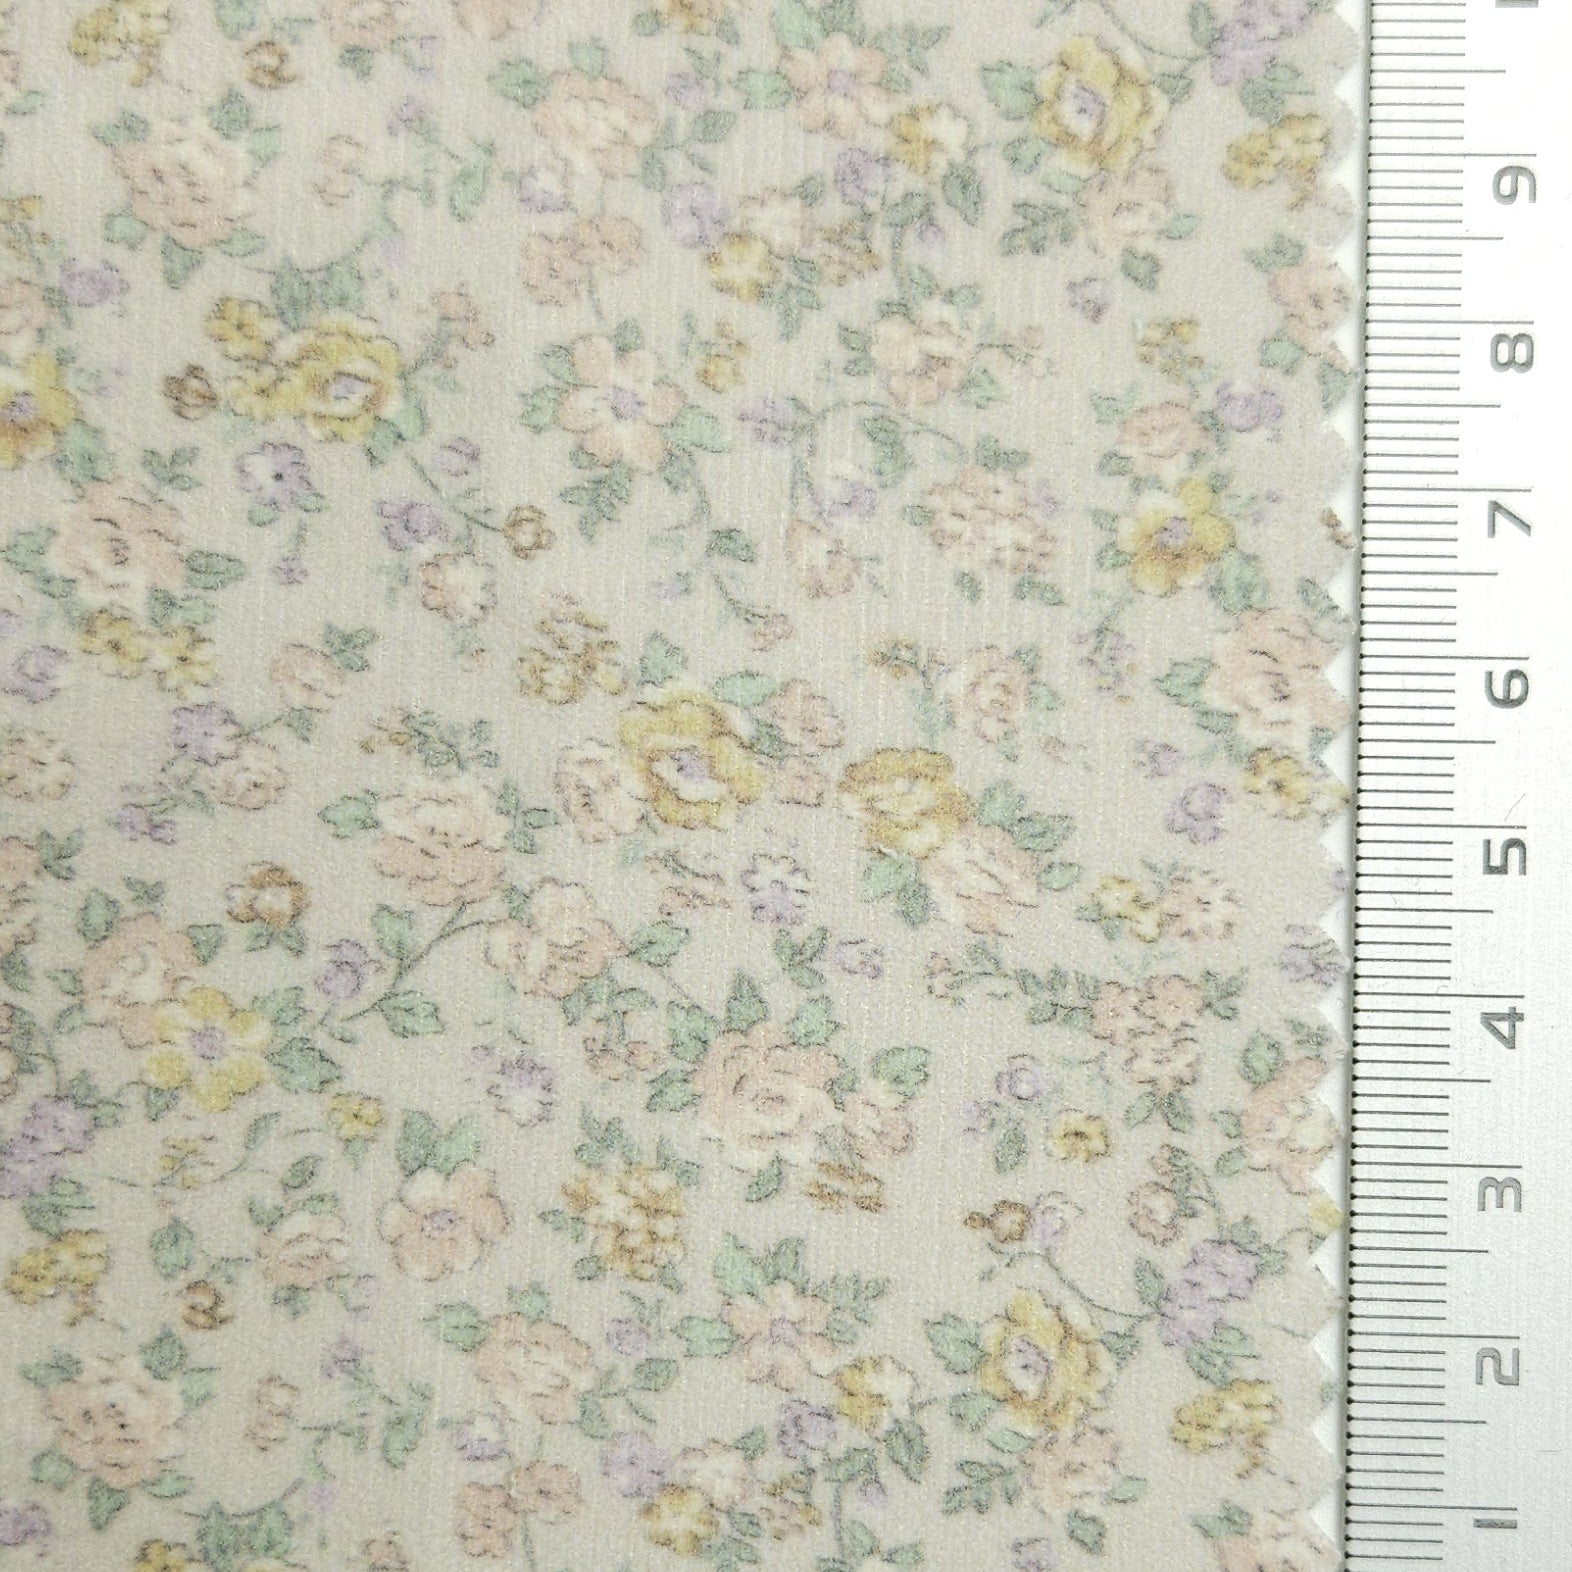 Print Floral Cotton Woven Fabric | FAB1579 | 1.Chatelle, 2.Blue Haze, 3.Conch, 4.Blue Haze, 5.Cello by Fabricis.com #